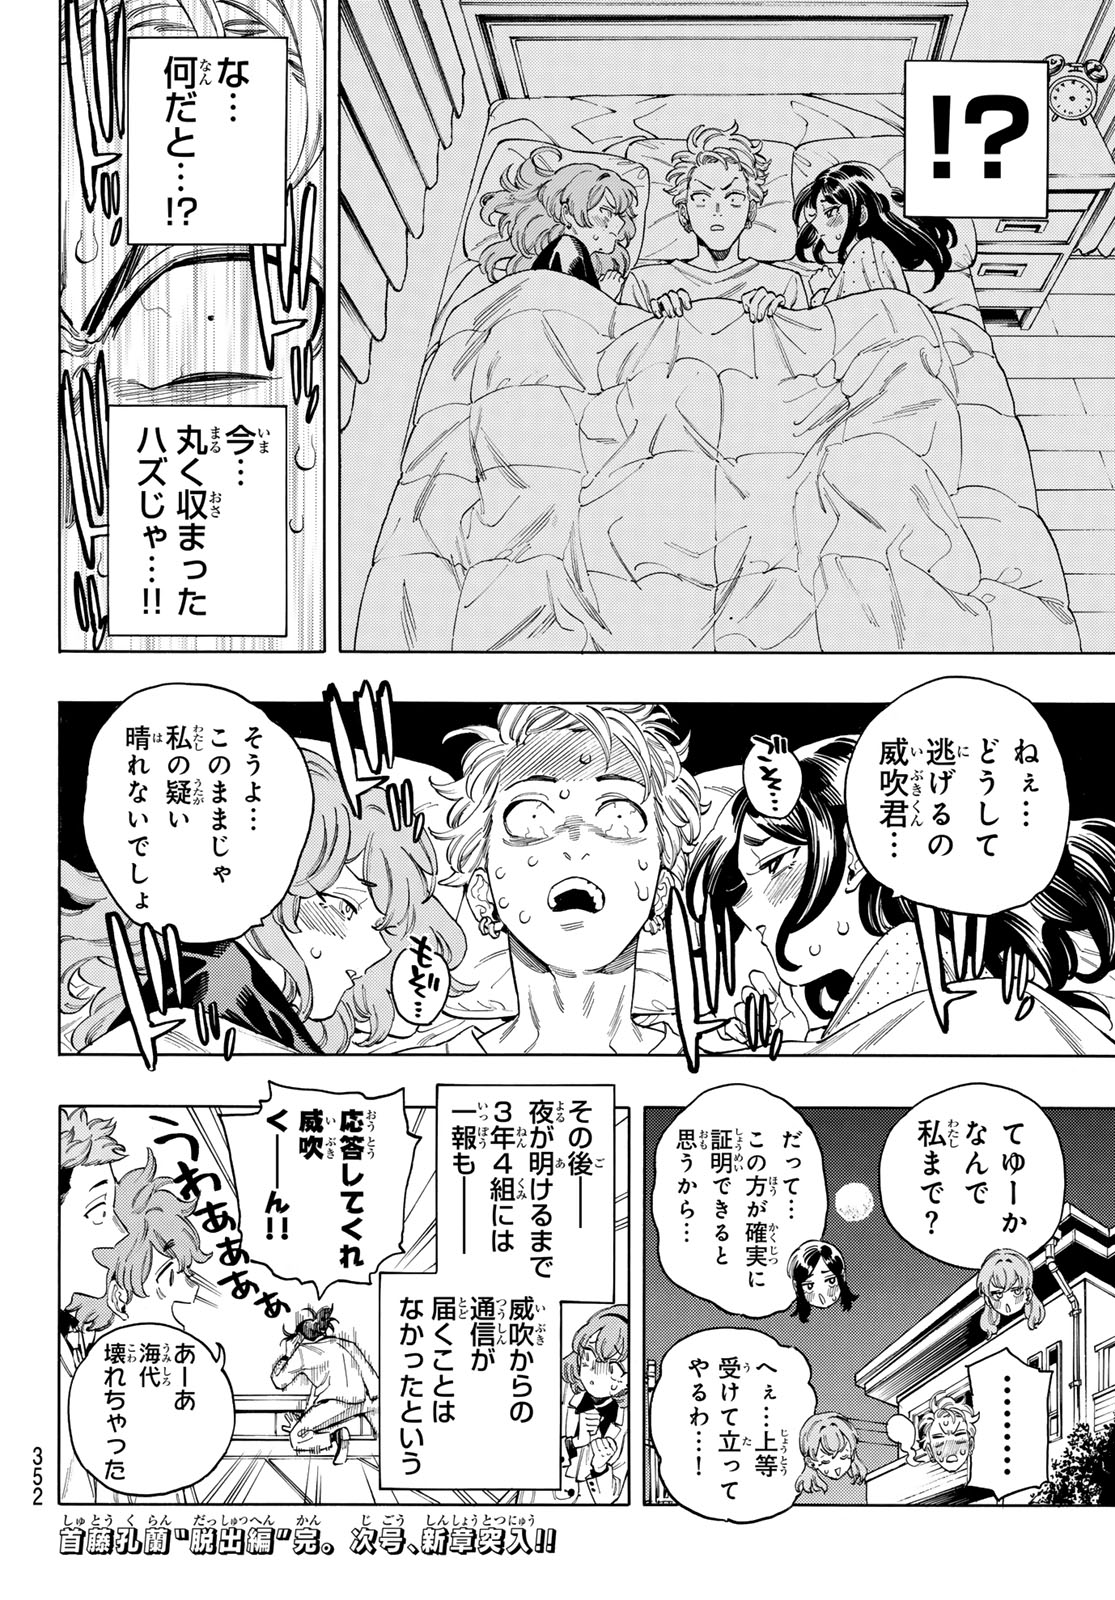 Akabane Honeko no Bodyguard - Chapter 74 - Page 20